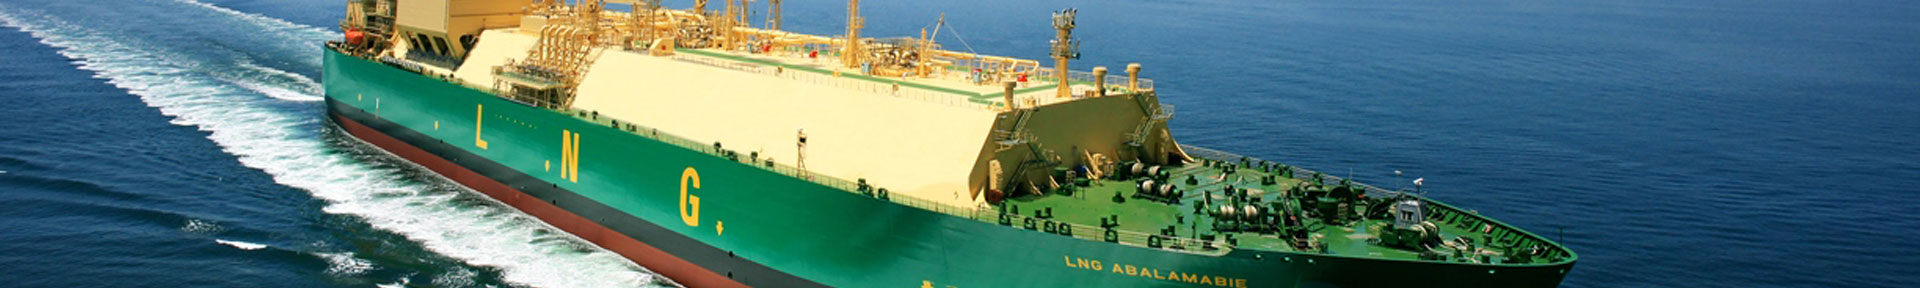 A Nigeria LNG ship at sea